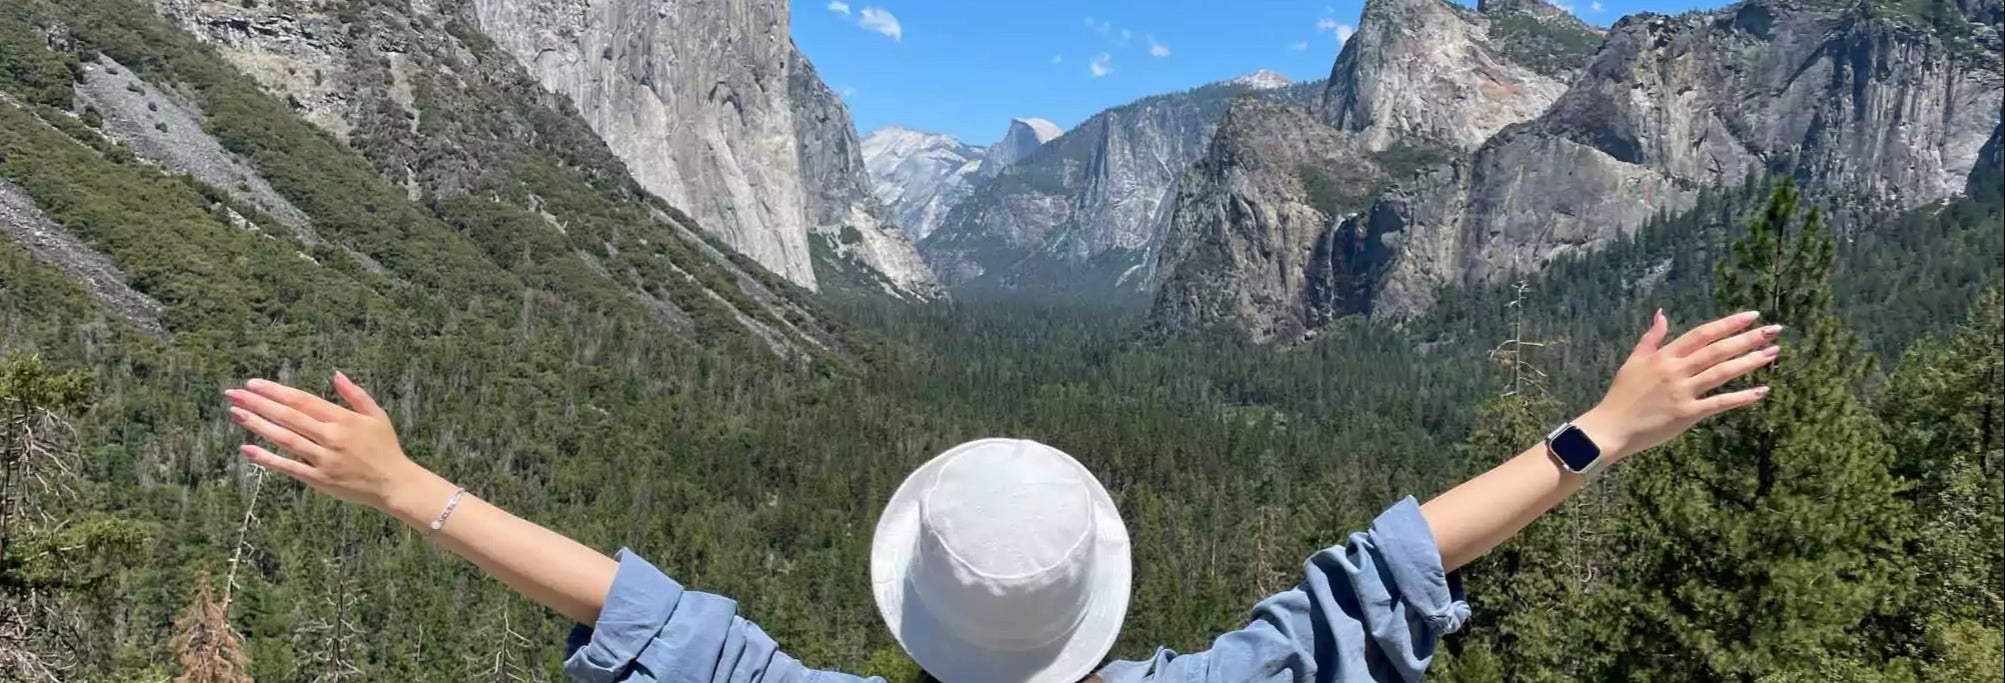 Excursão a Yosemite